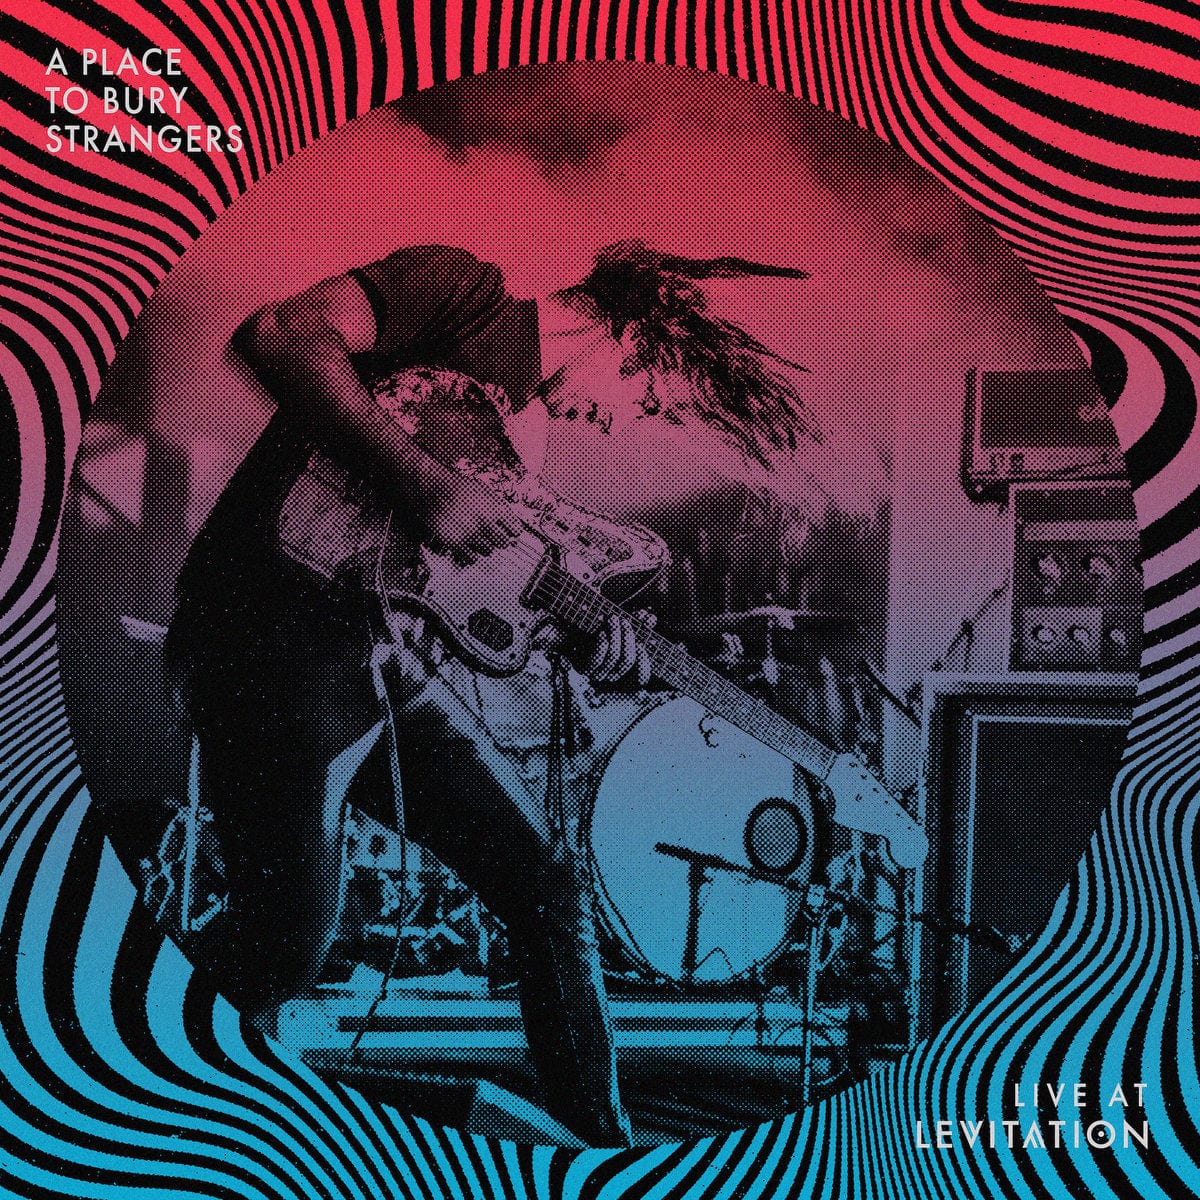 A Place to Bury Strangers - Live at Levitation (Pink Splatter Vinyl)